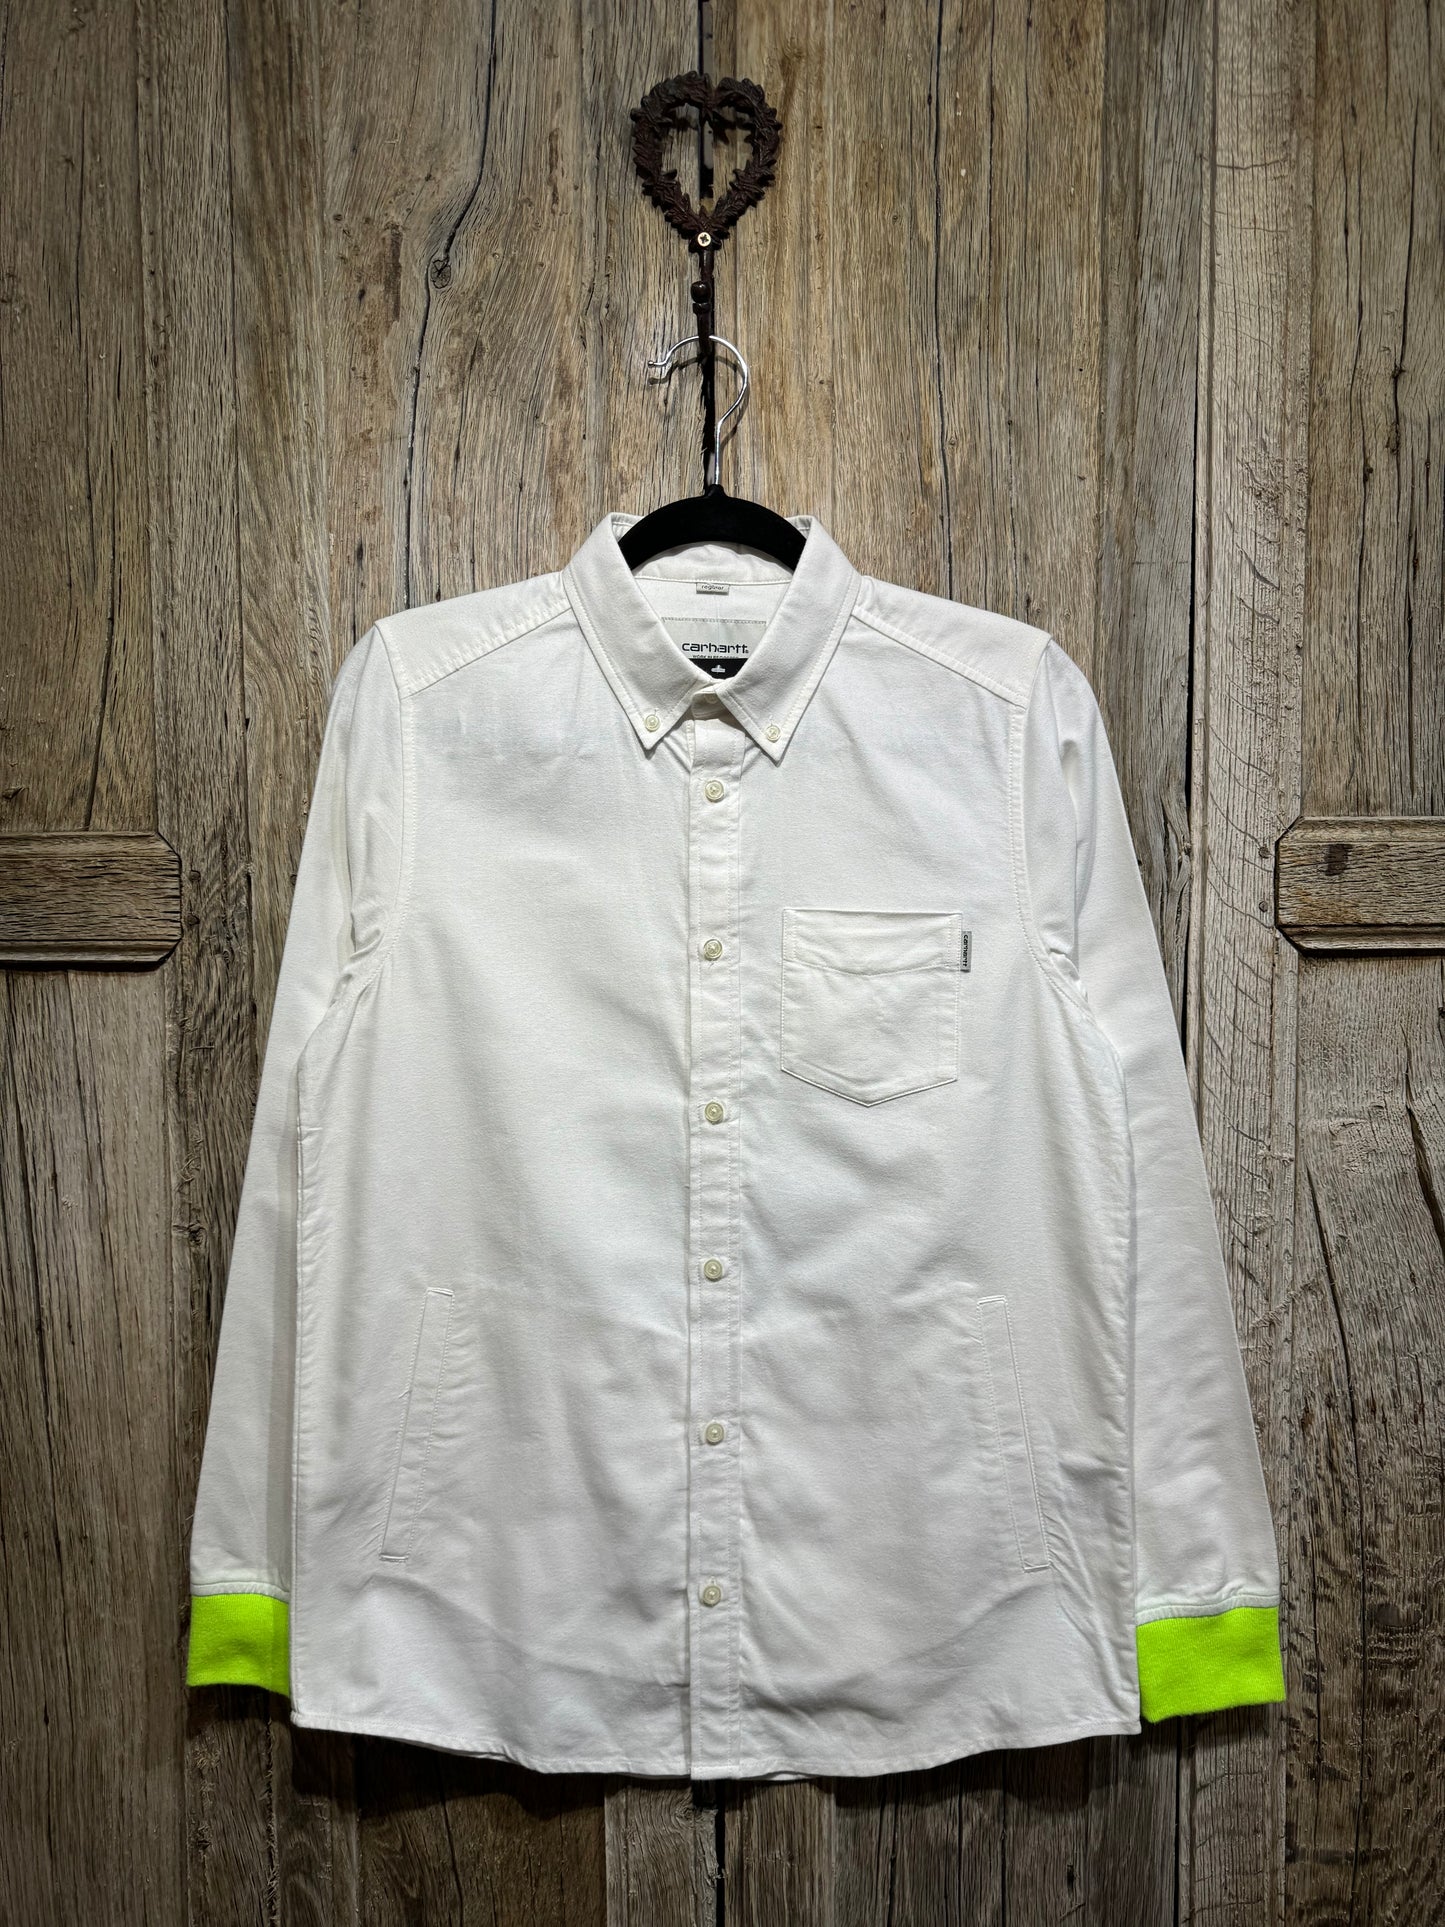 Carhartt White Button Shirt